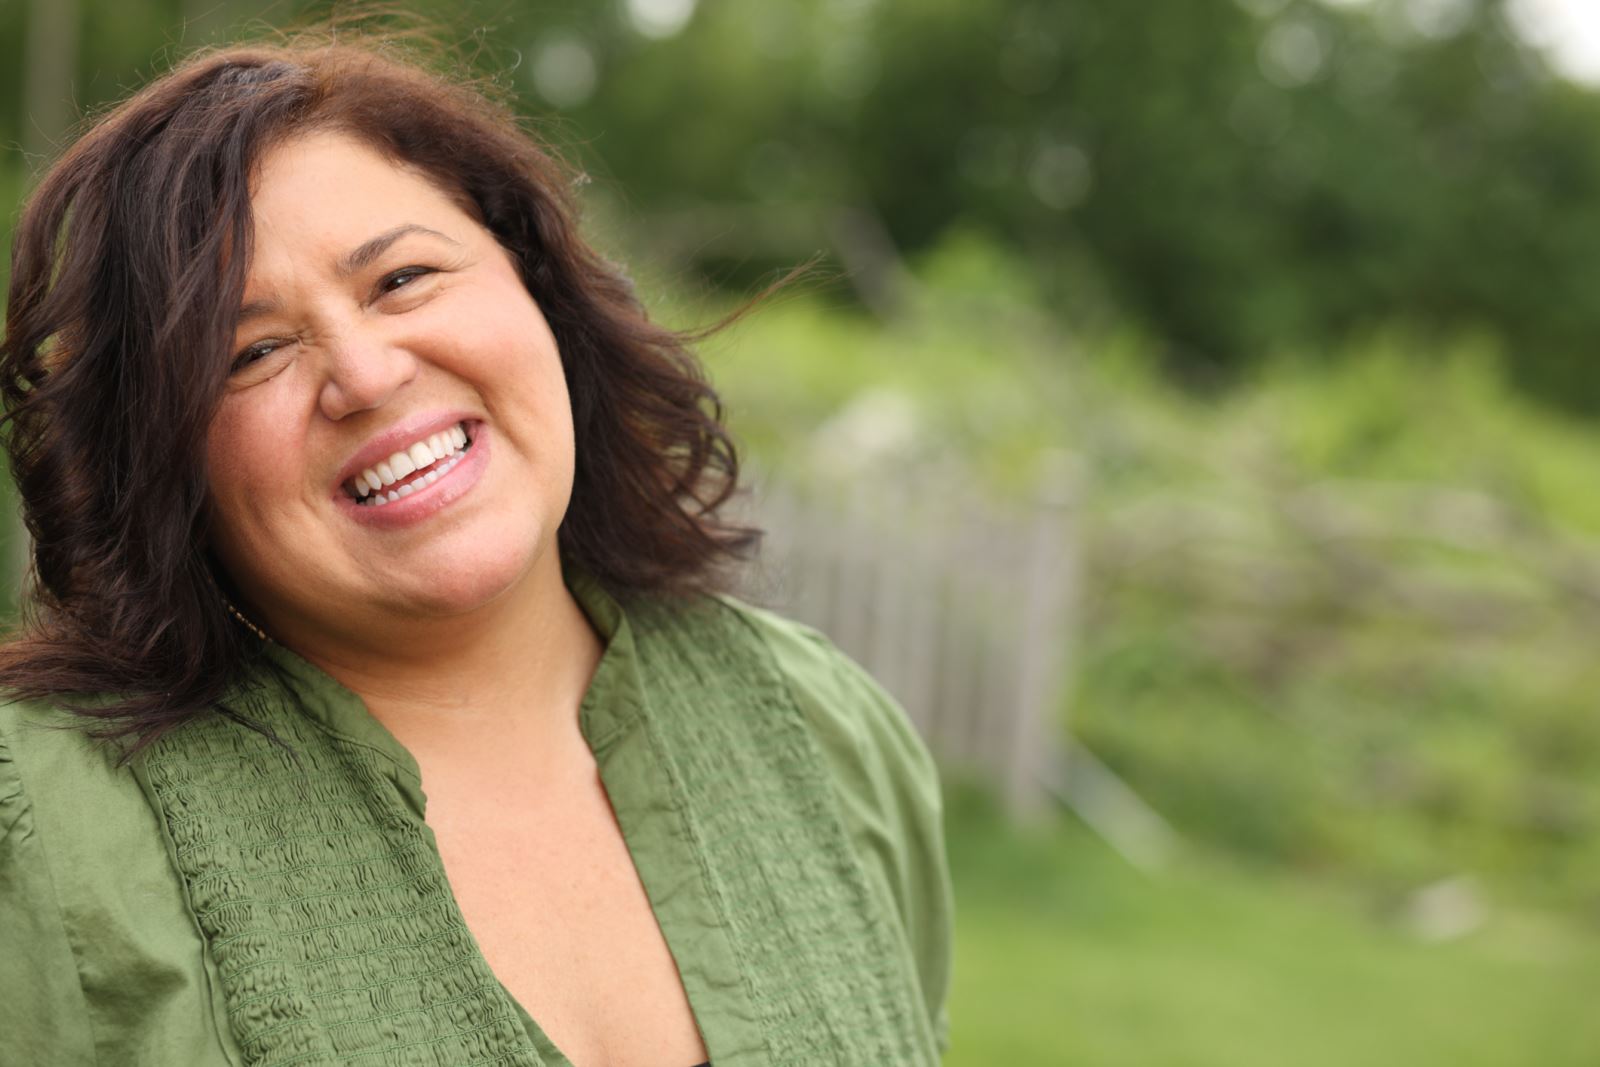 Hispanic woman wearing a green shirt smiling outside. 